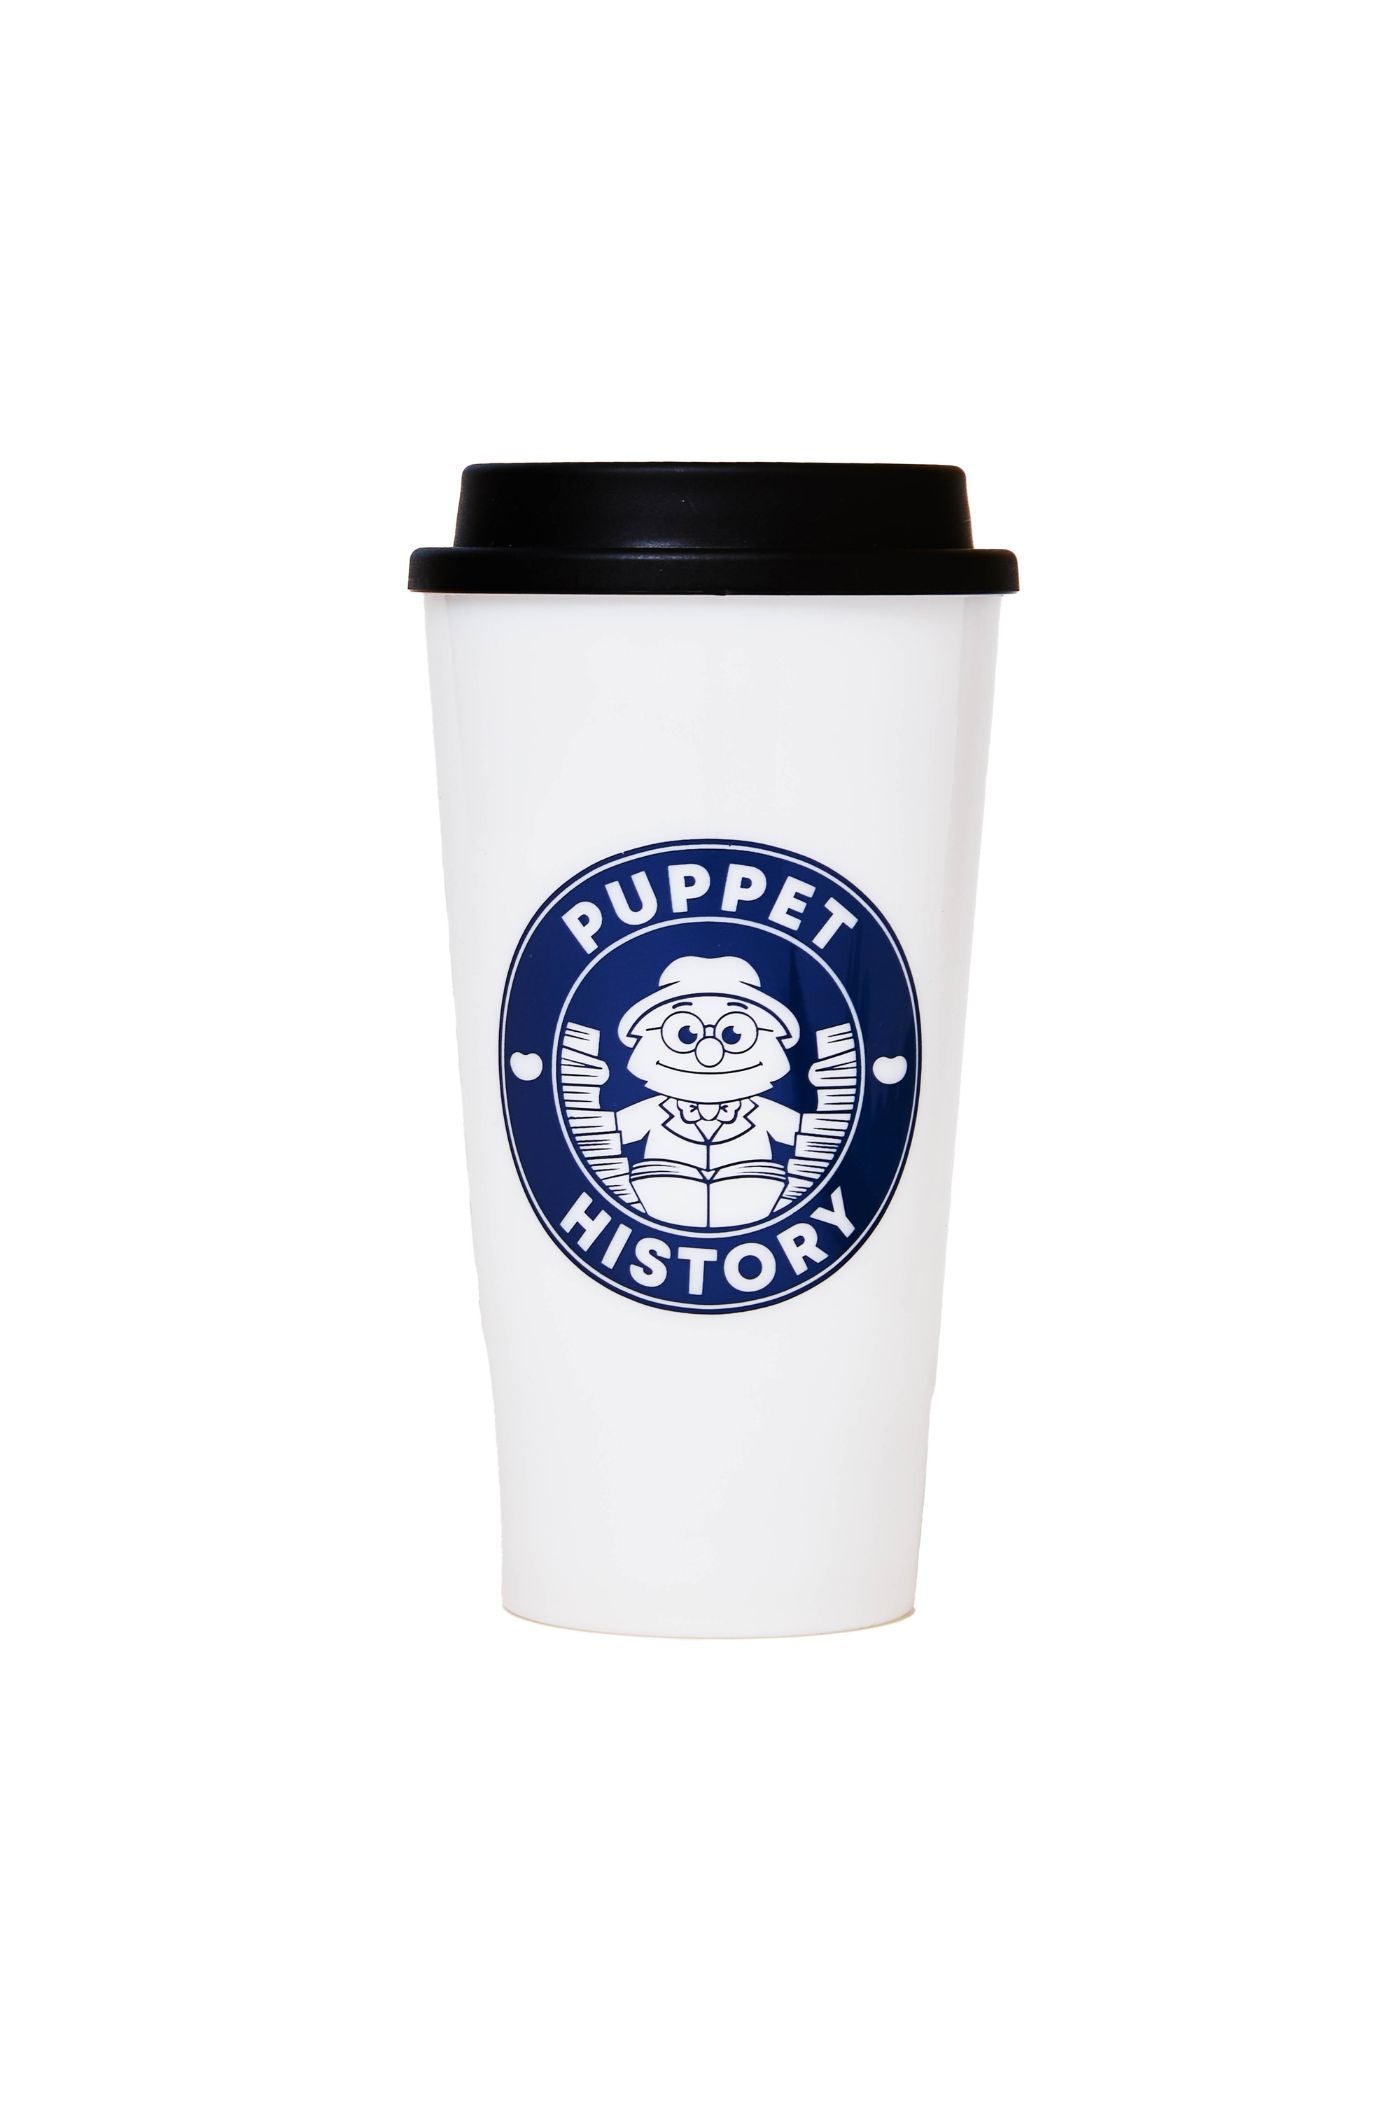 PUPPET HISTORY | 1st Edition Travel Coffee Mug